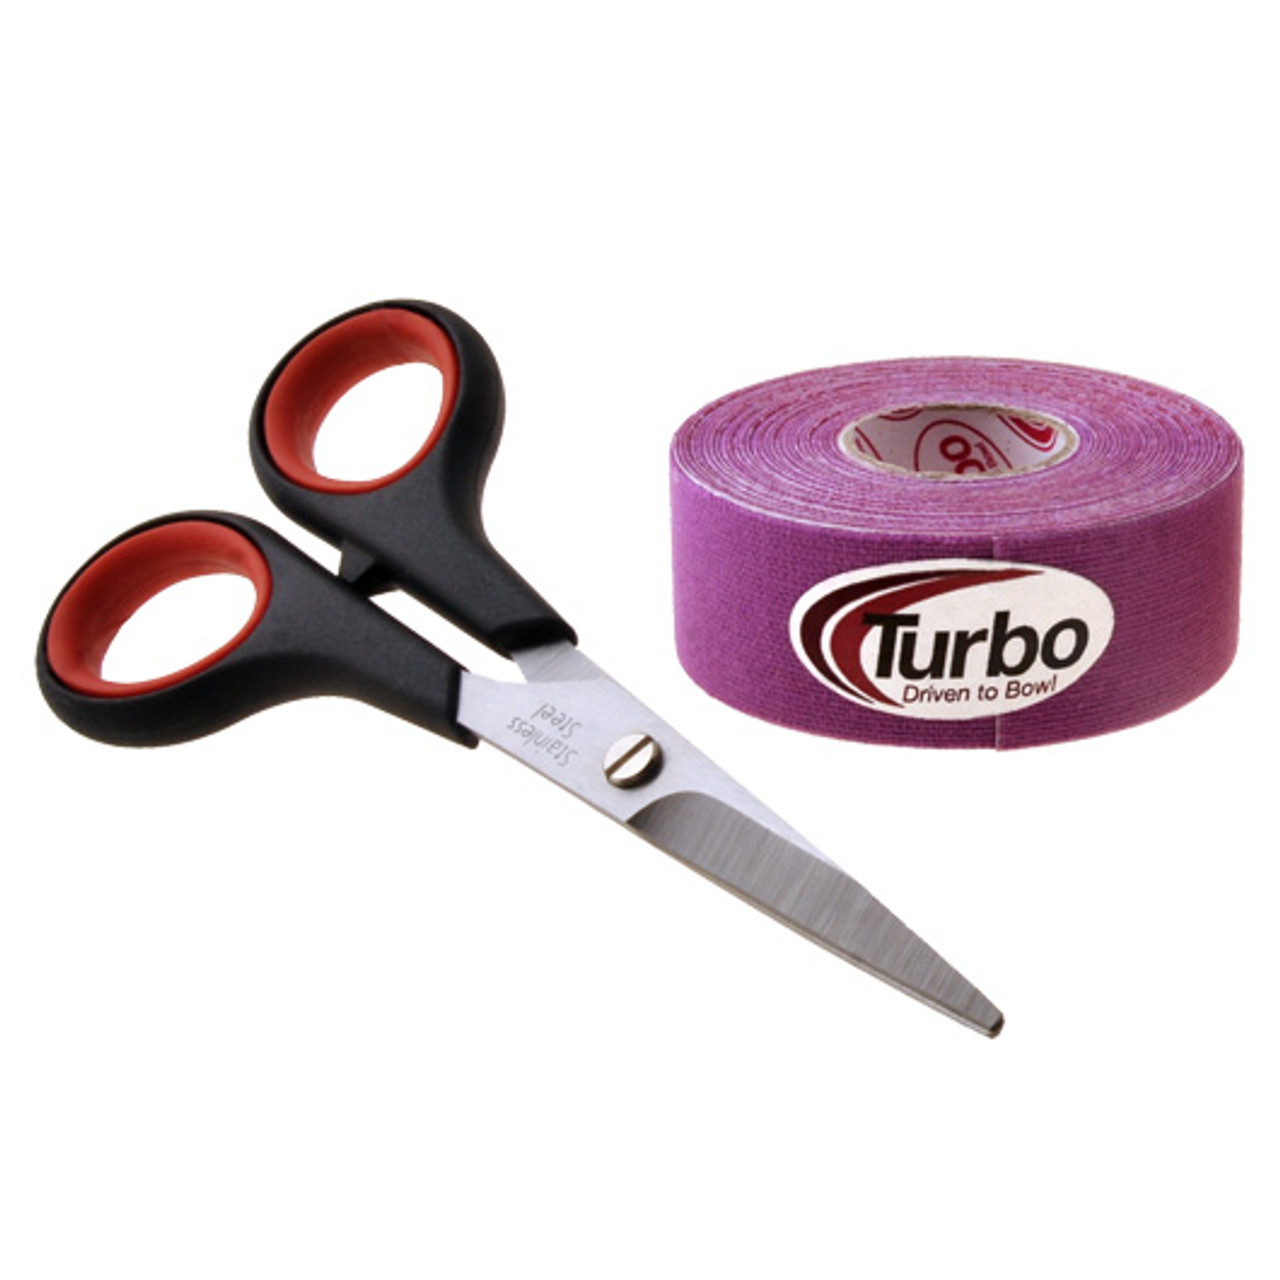 Free shipping! Turbo Bowling Tape Scissors Tool 